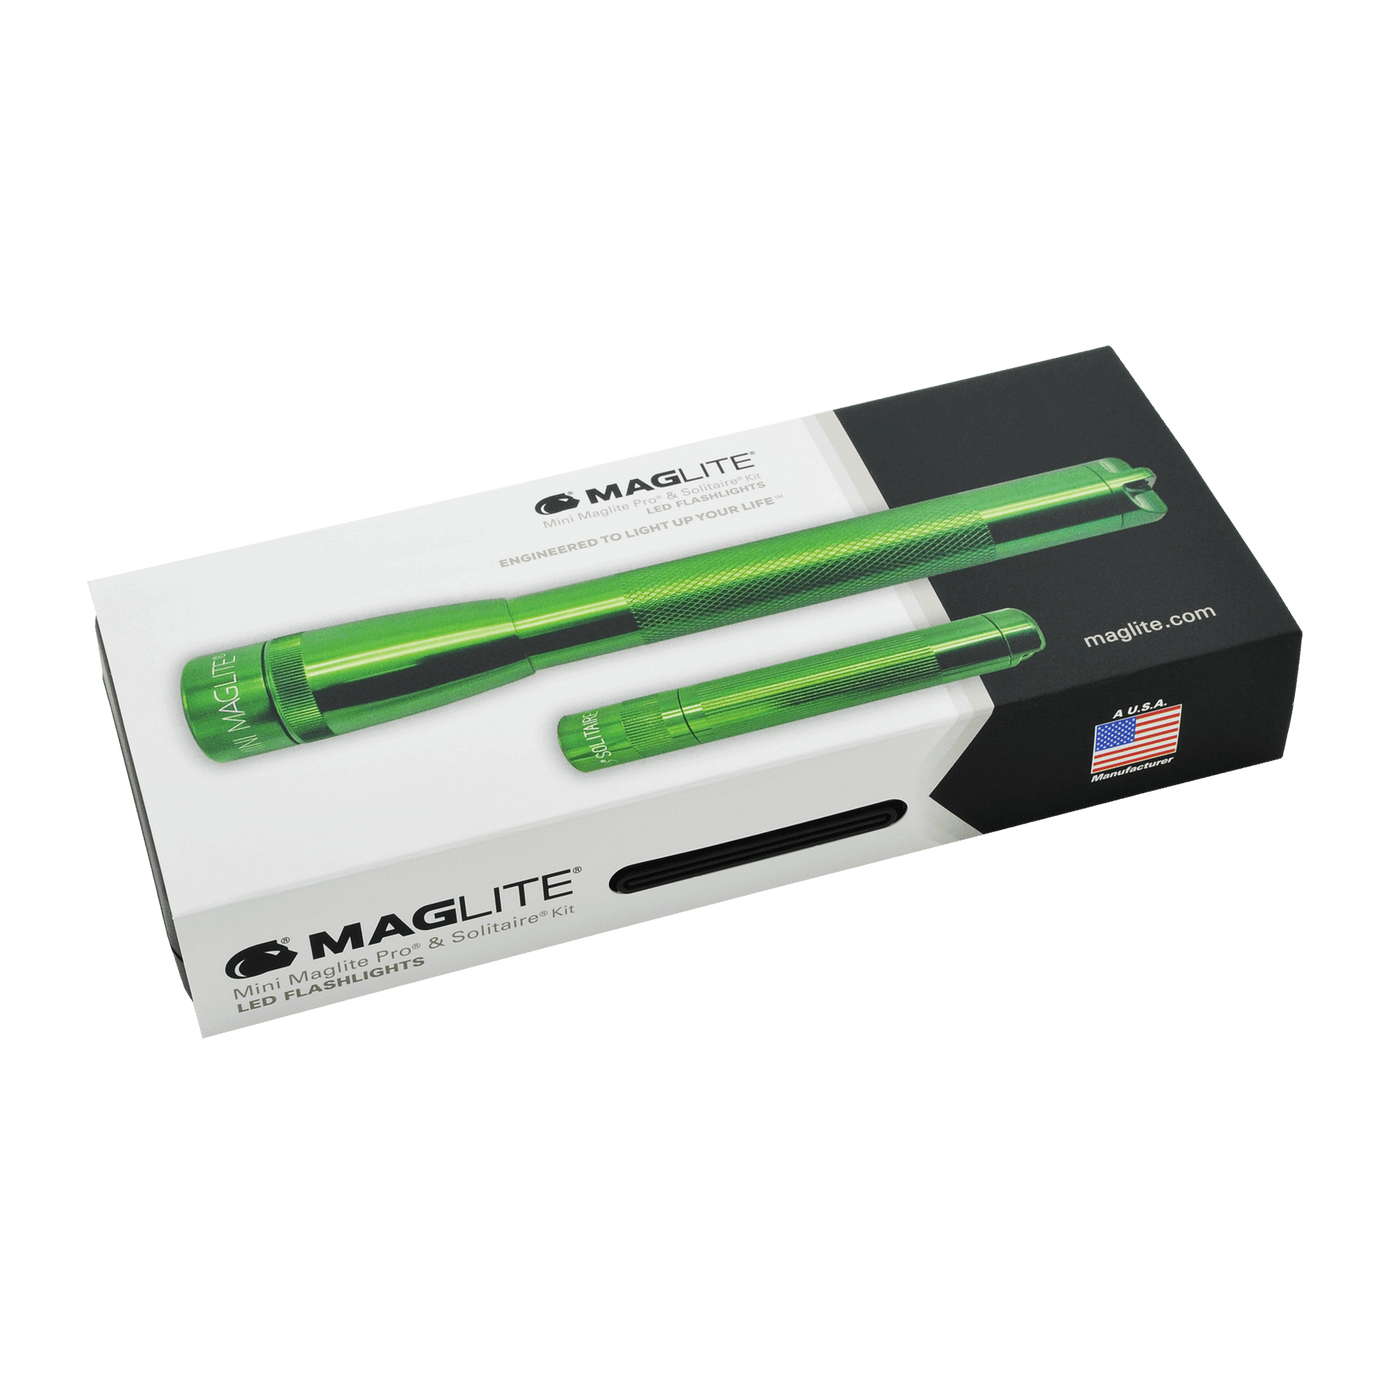 Maglite City Life Kit LED Pocket Flashlight-Green